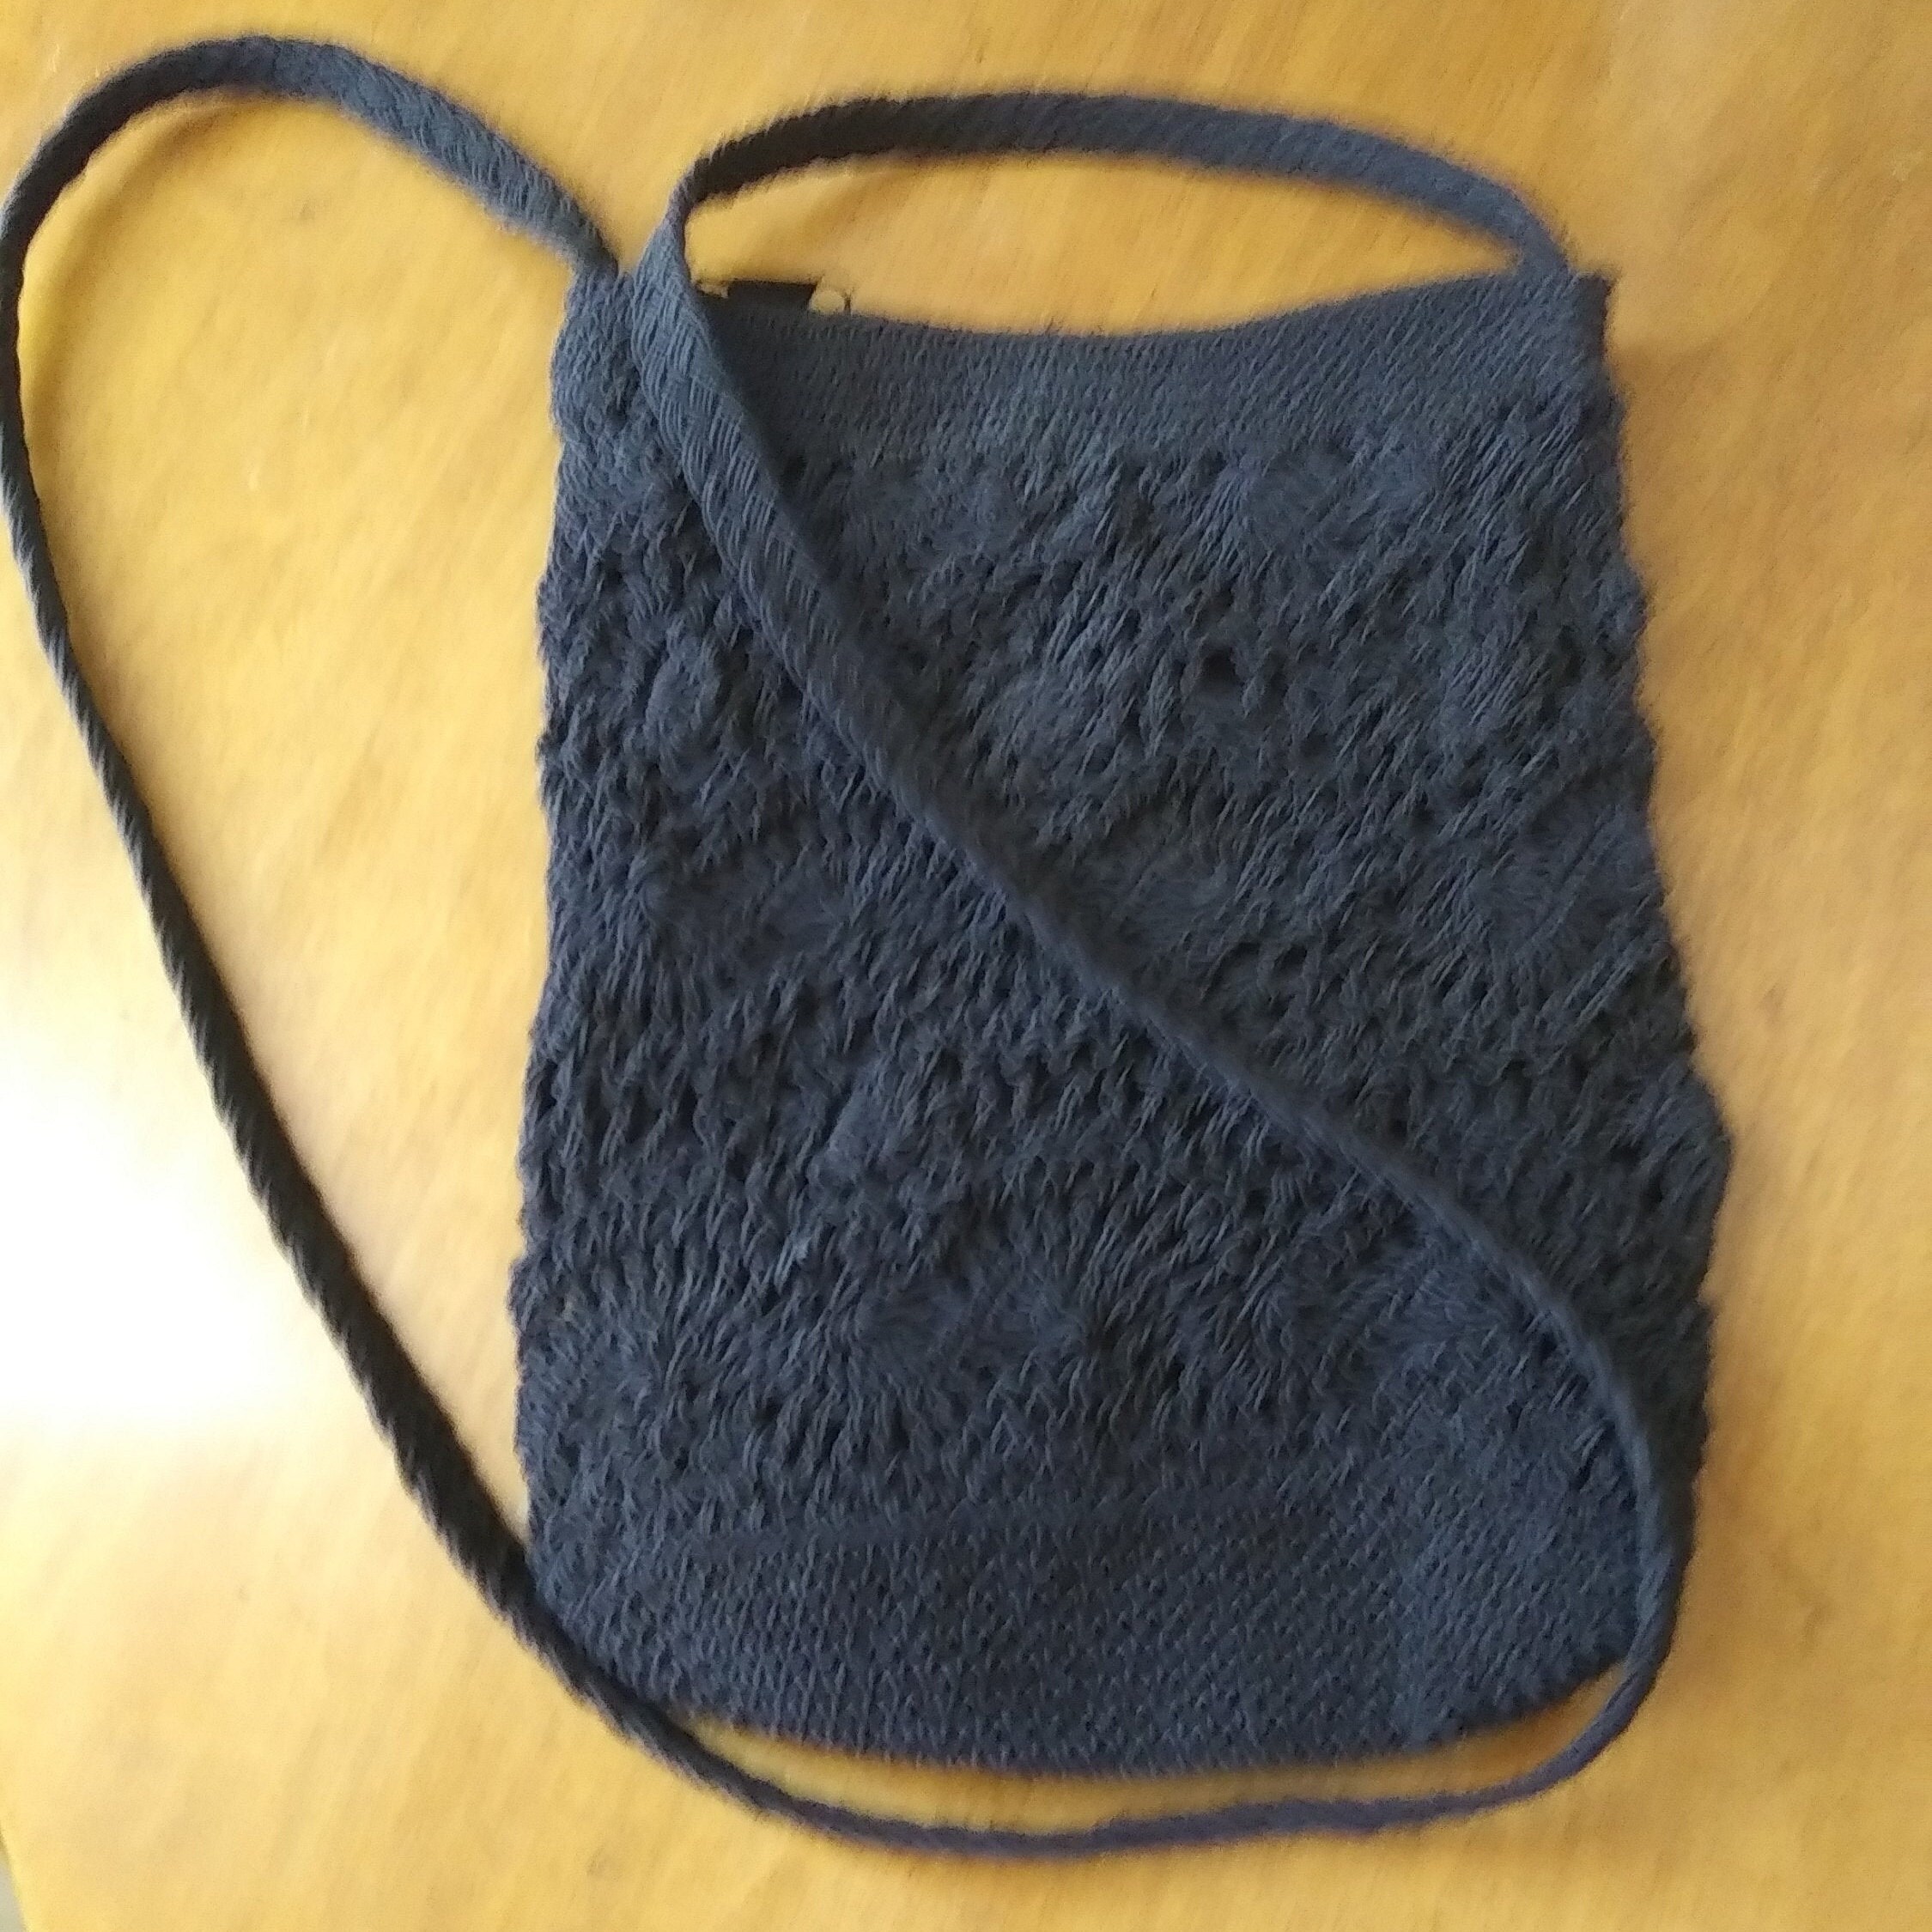 Crocheted Black Cotton/Olefin Blend Shoulderbag/Crossbody Purse By Kathie Lee, Top Zipper Cotton Lining